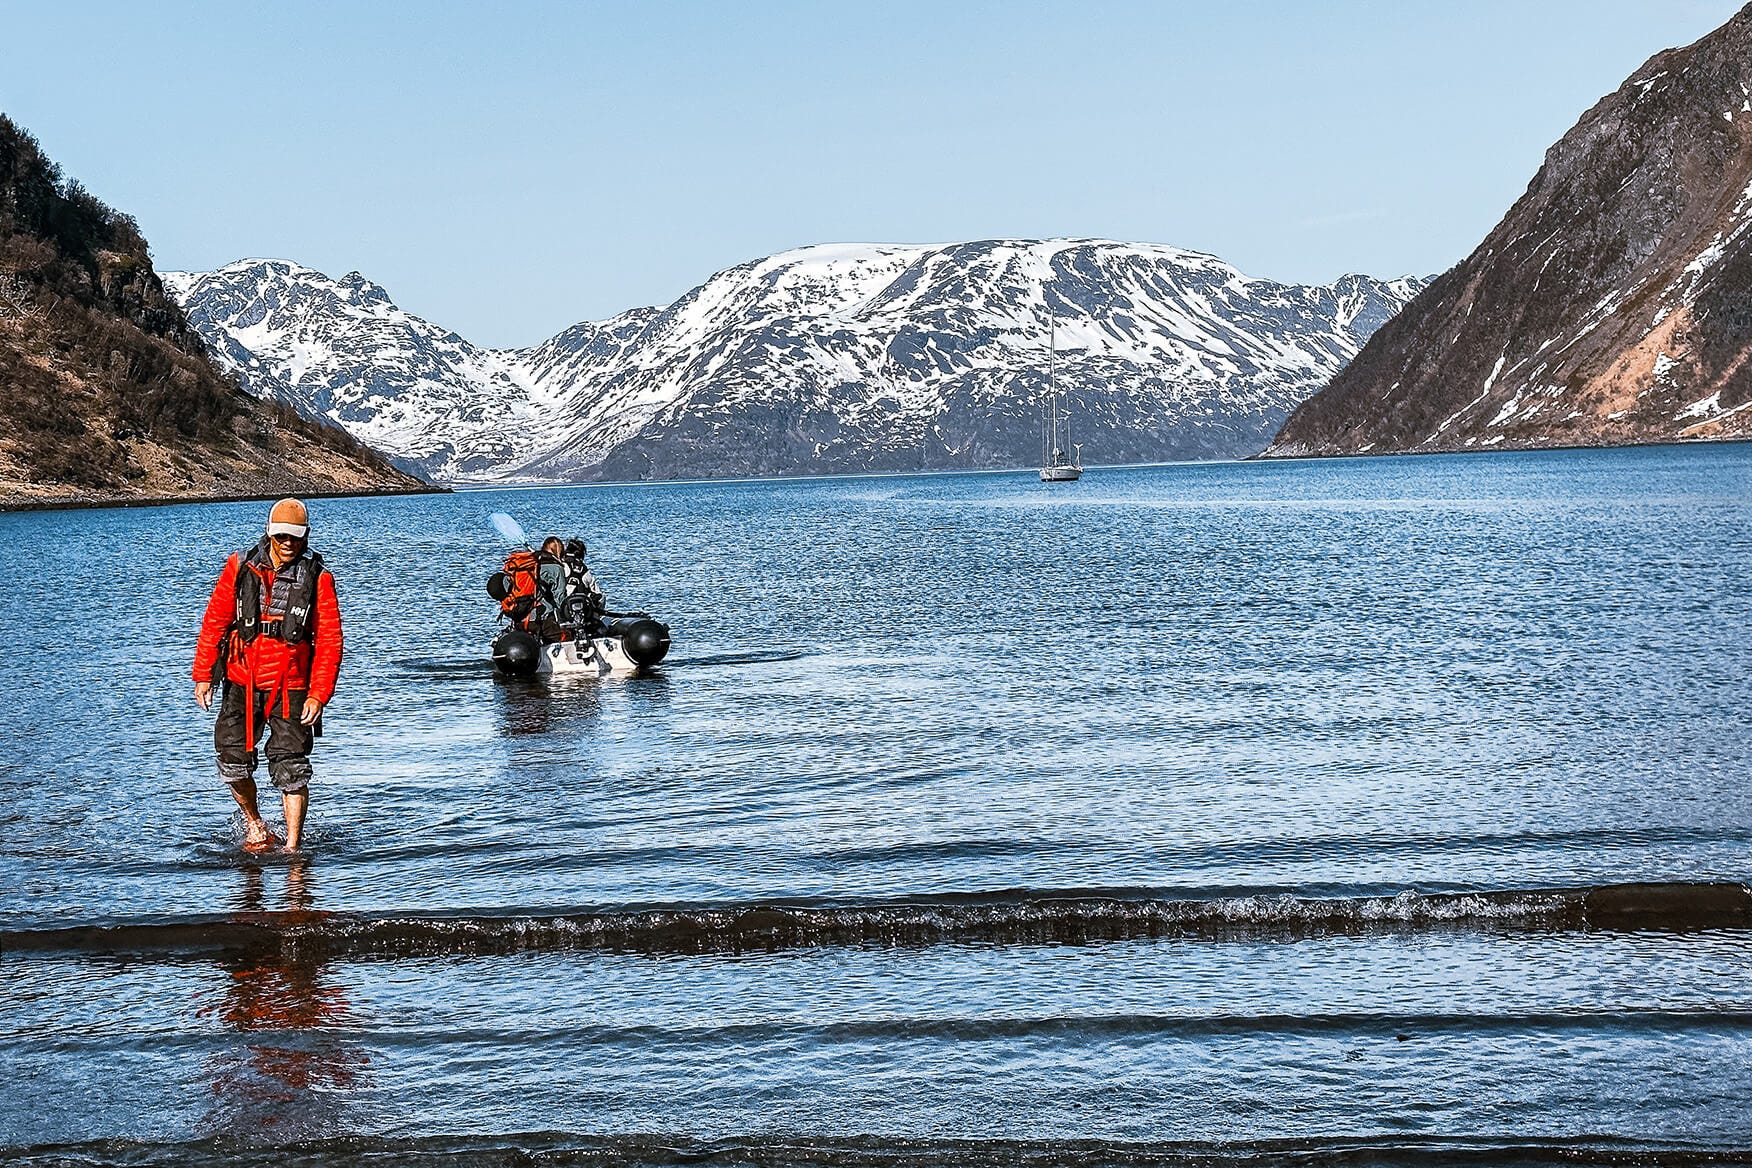 Skier wading towards shore on a beach in Finnmark